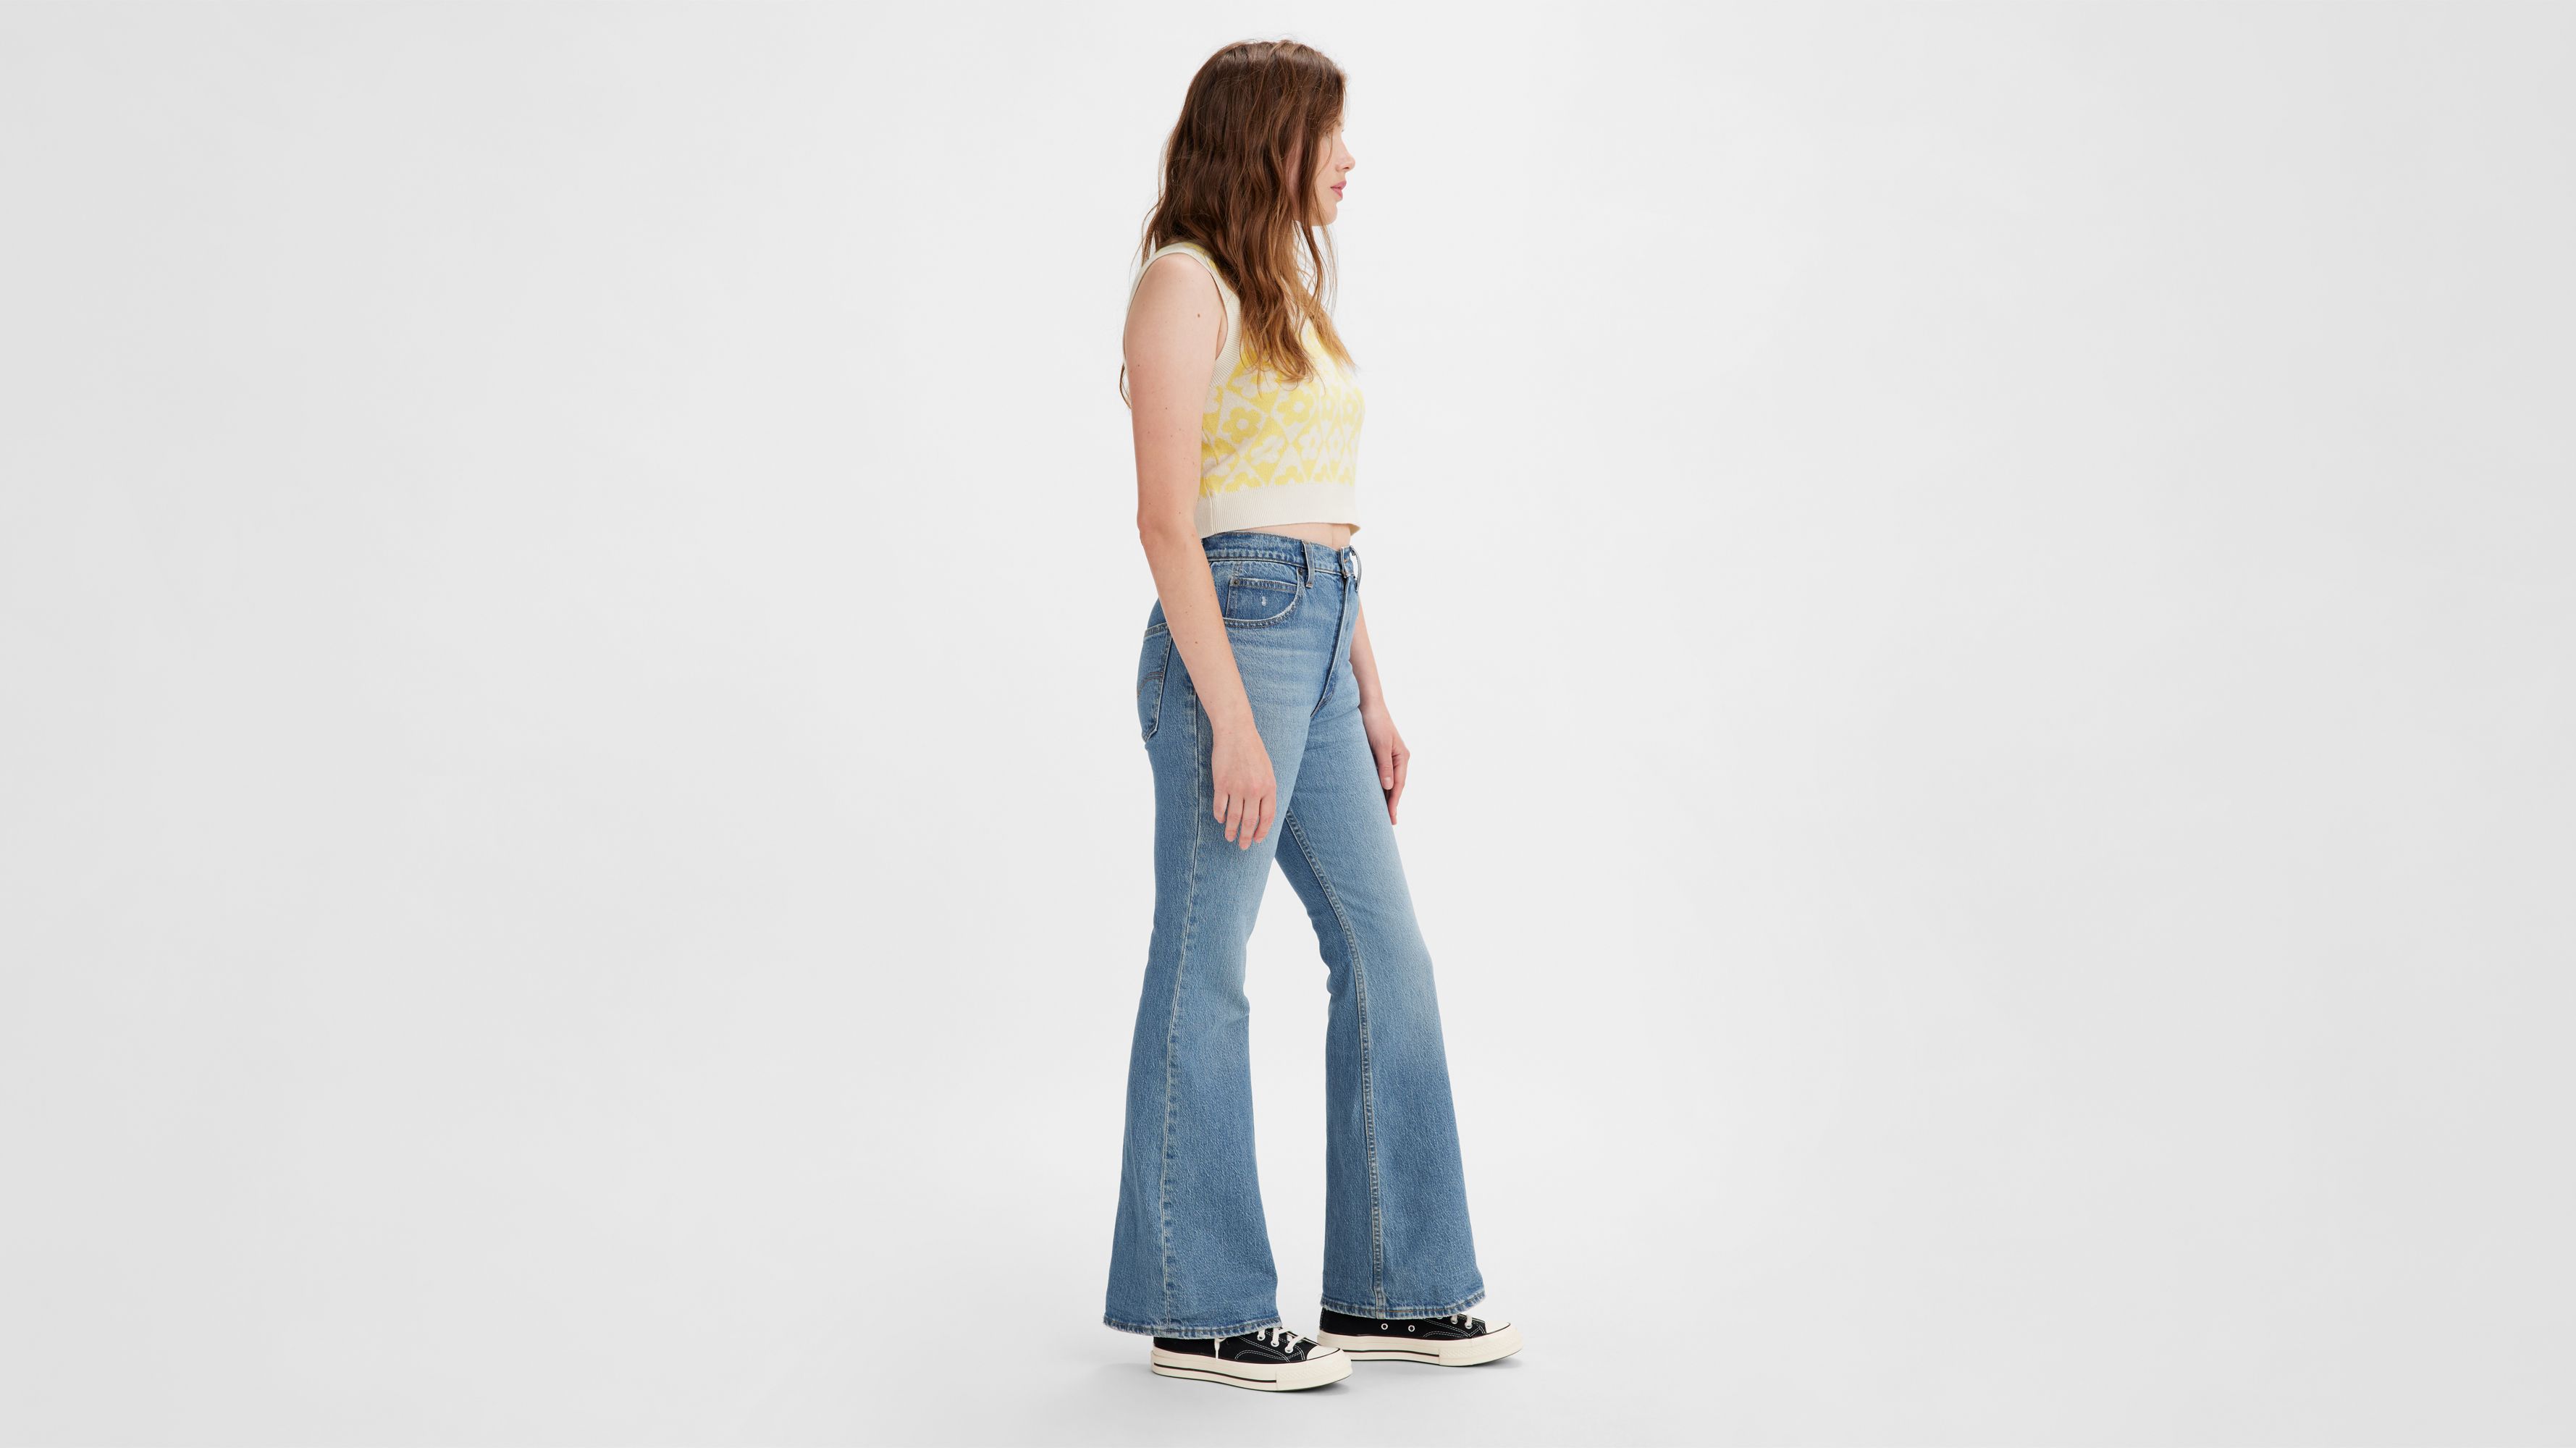 70's High Flare Women's Jeans - Black